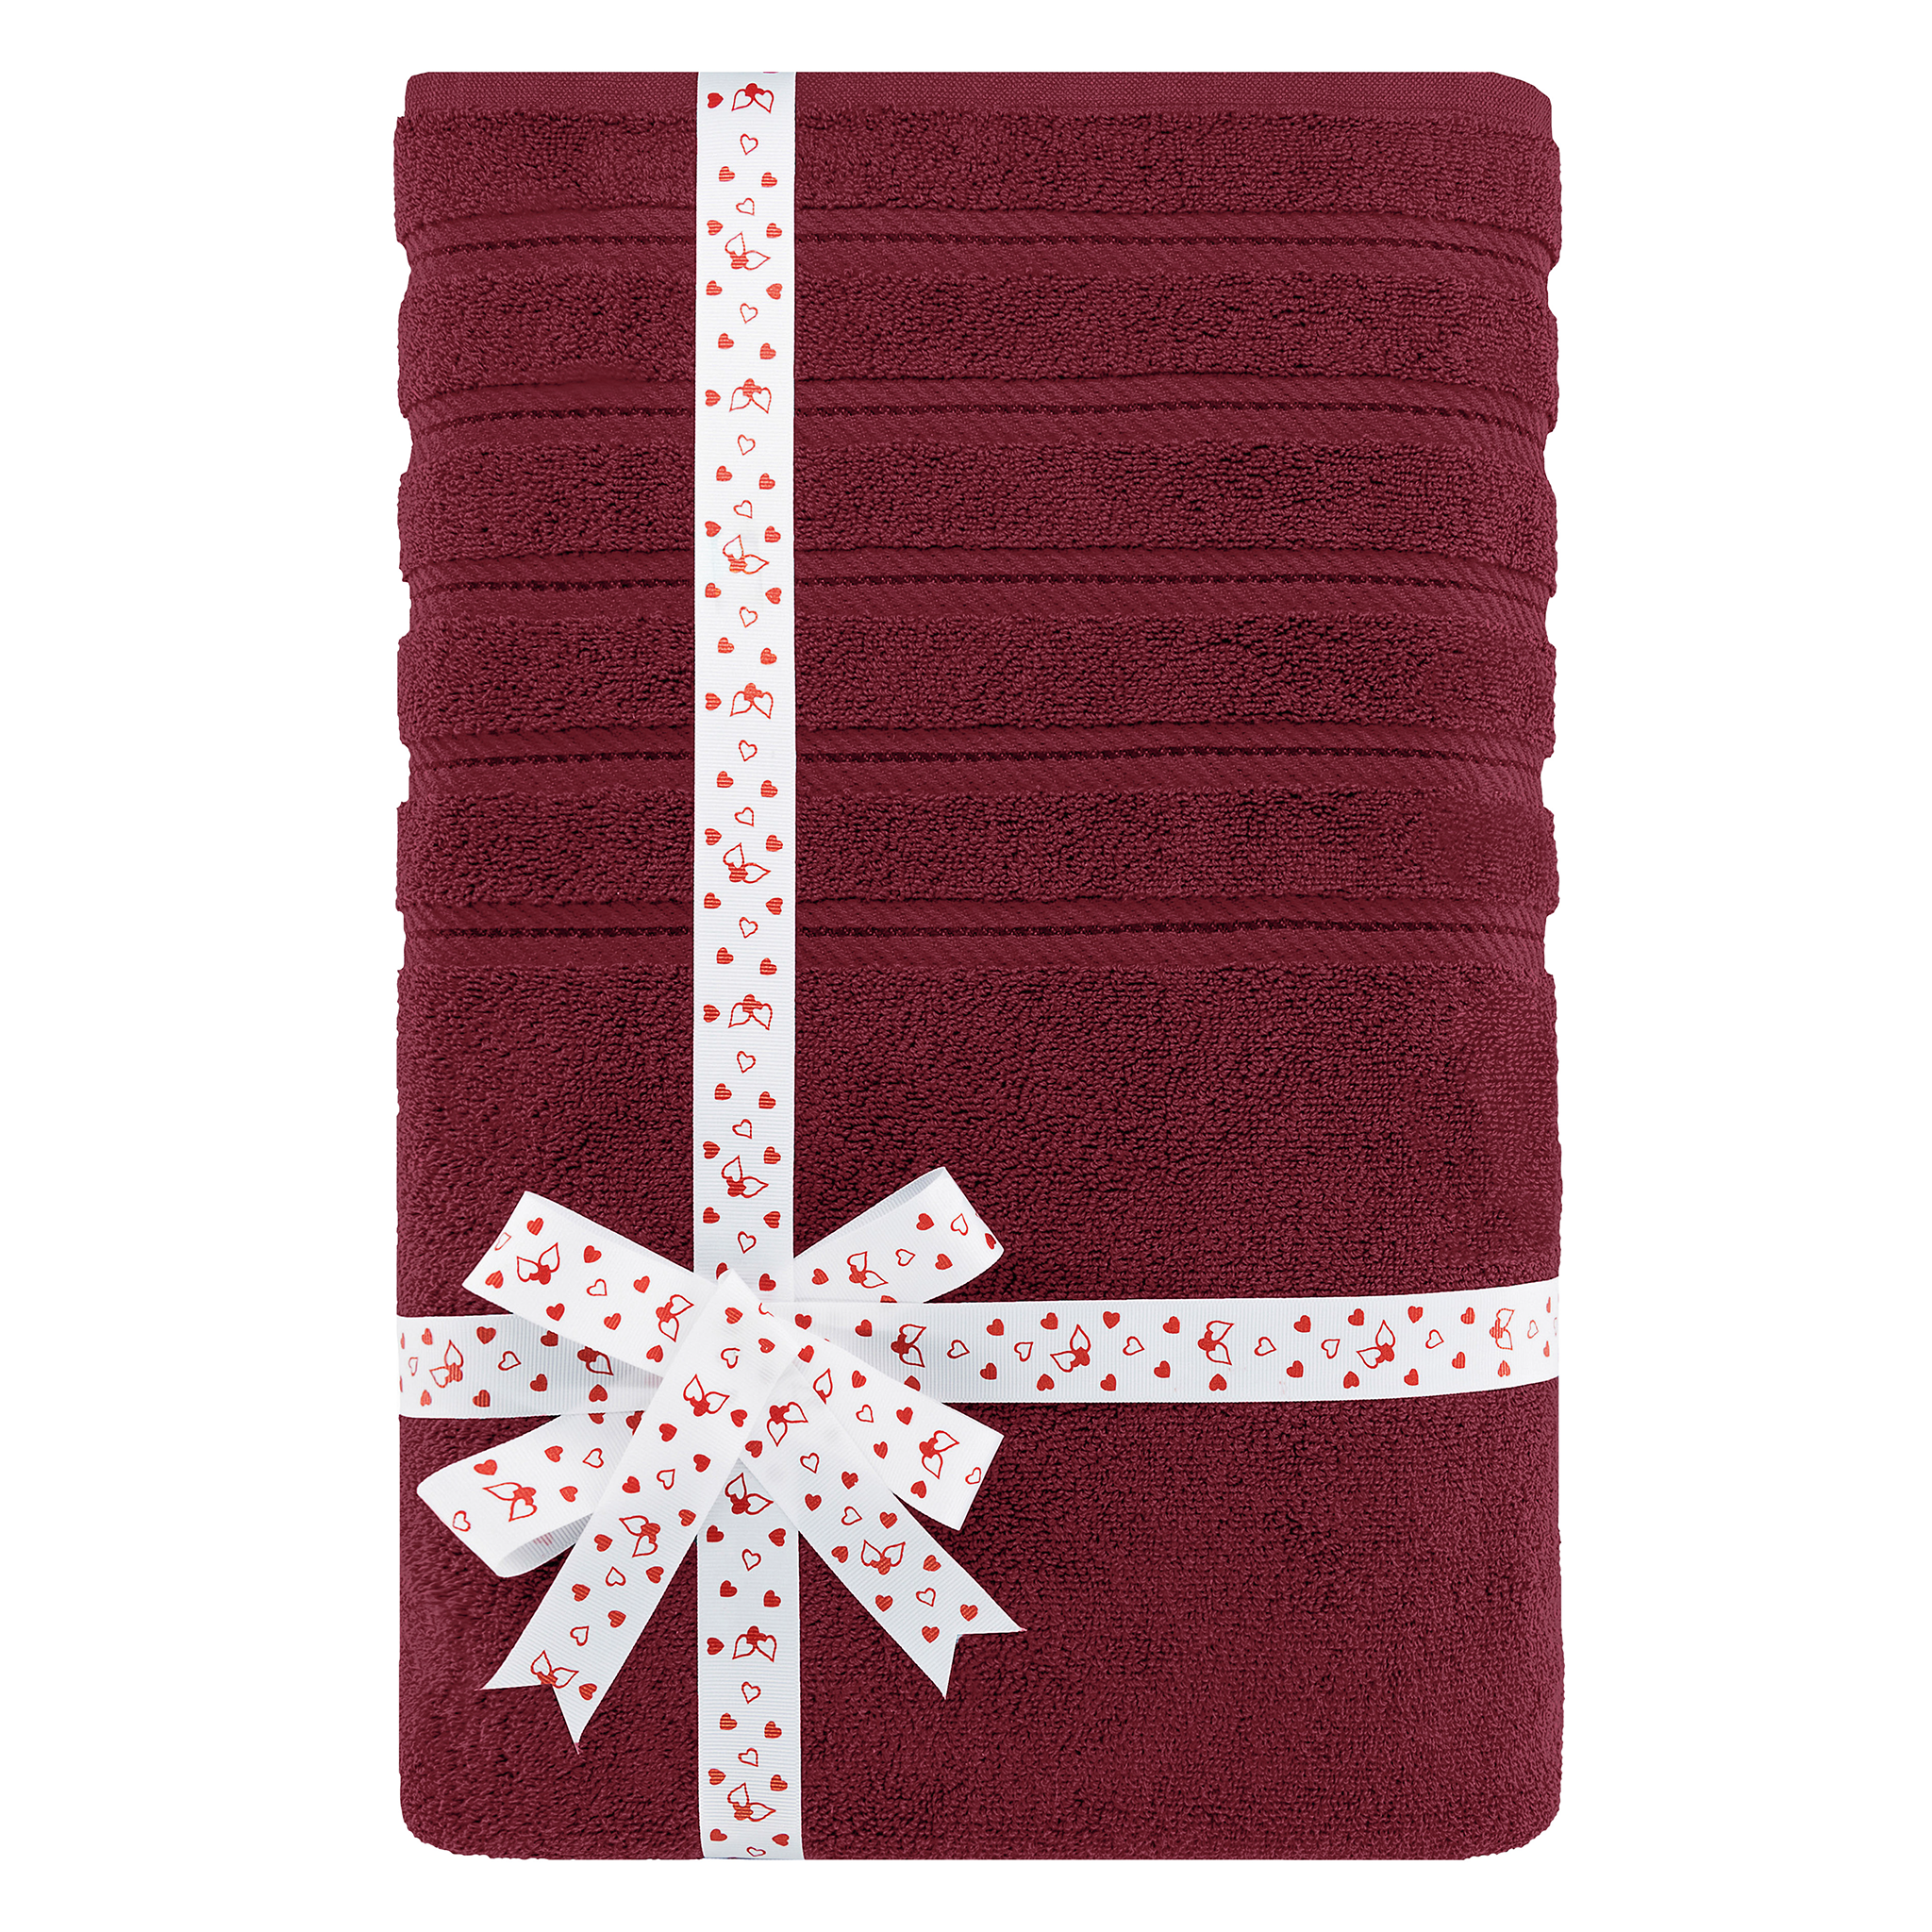 American Soft Linen - 35x70 Jumbo Bath Sheet Turkish Bath Towel - 16 Piece Case Pack - Bordeaux-Red - 3